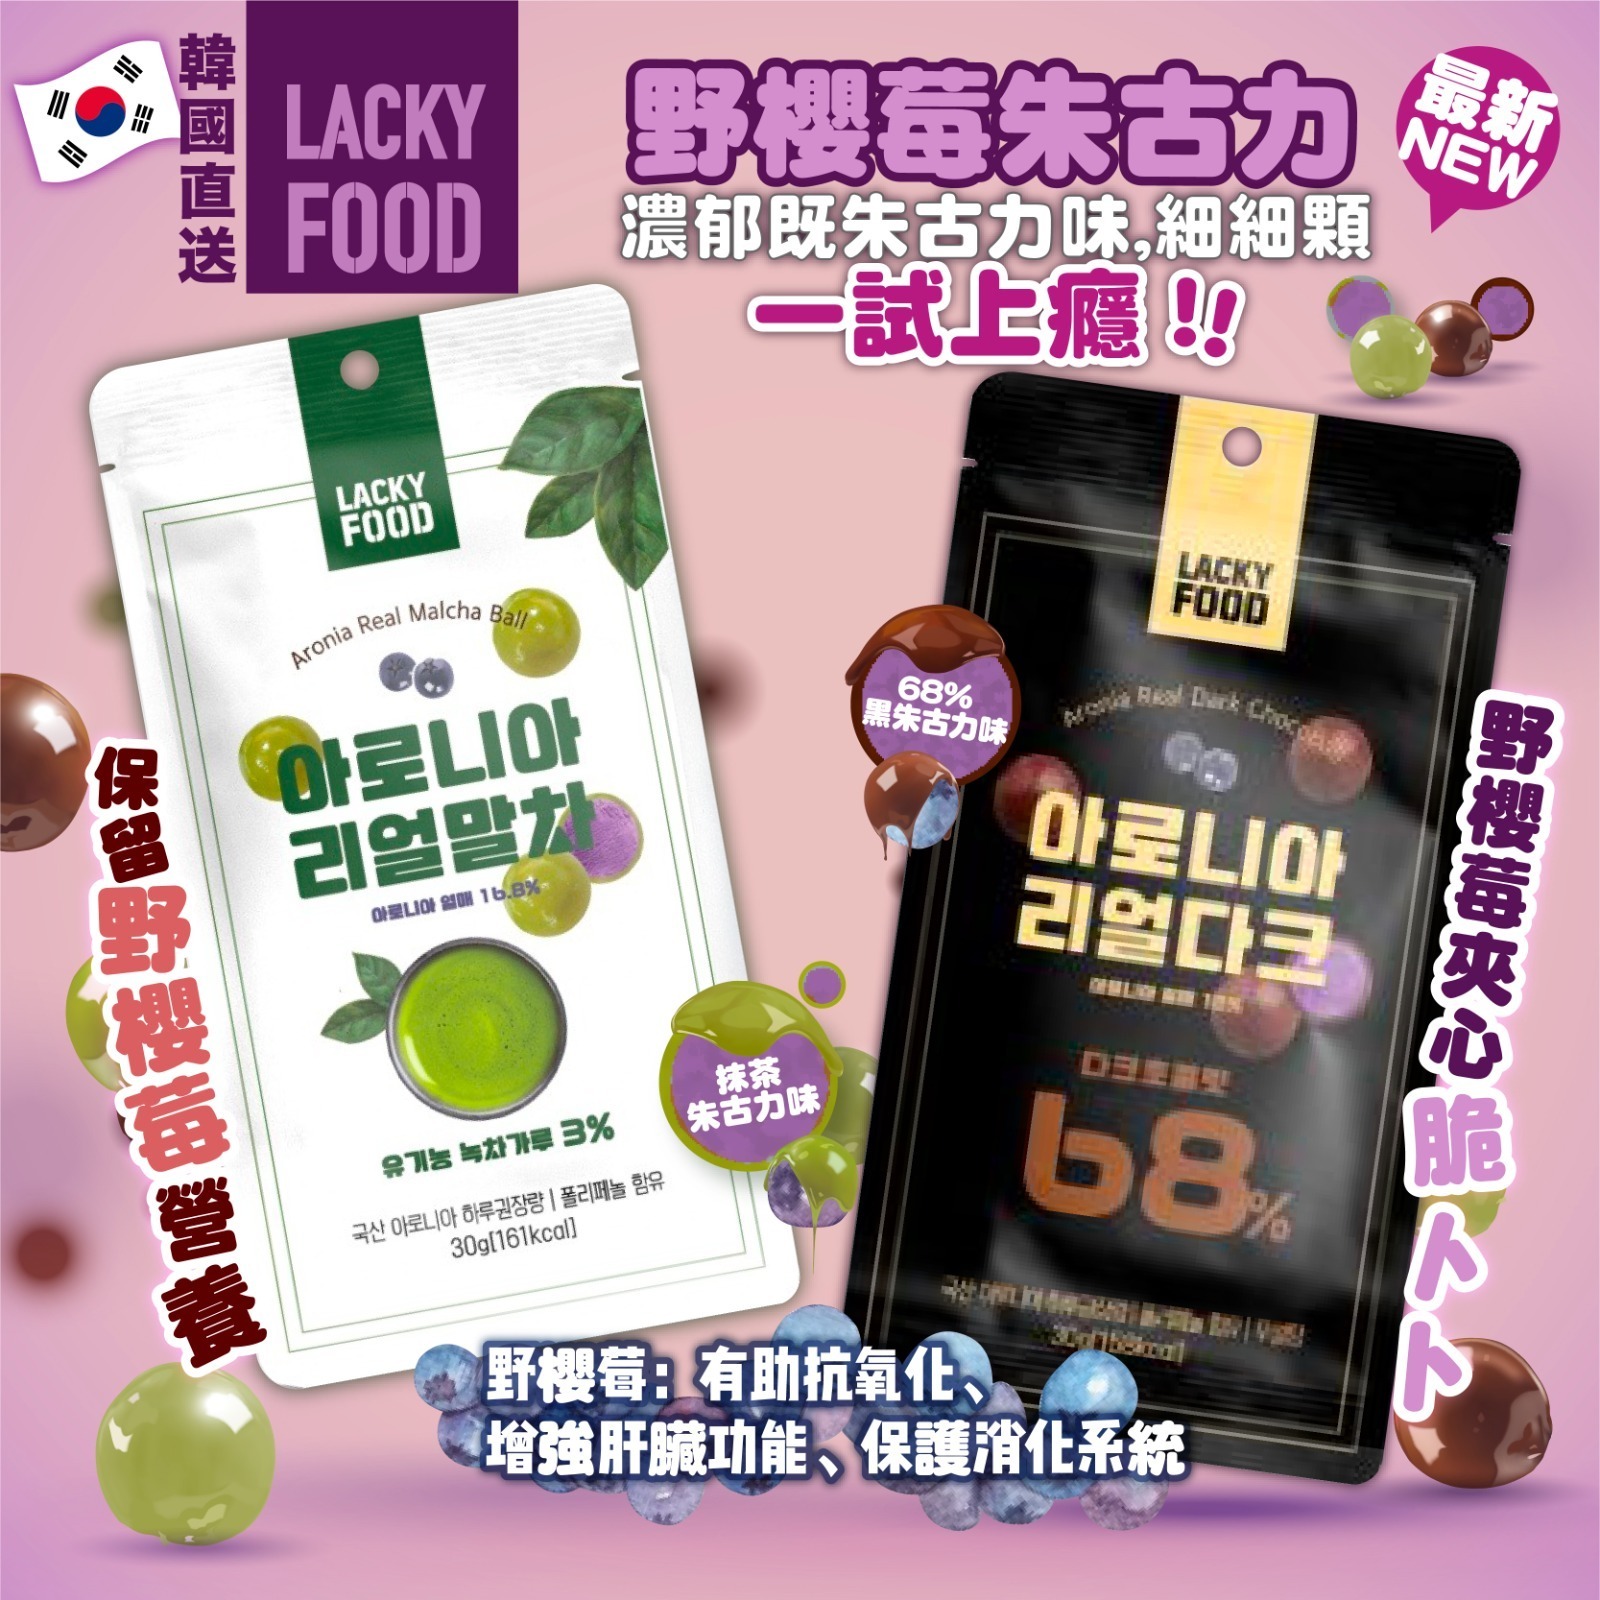 Lacky food最新野櫻莓朱古力　一套2包: 抹茶+黑朱古力味